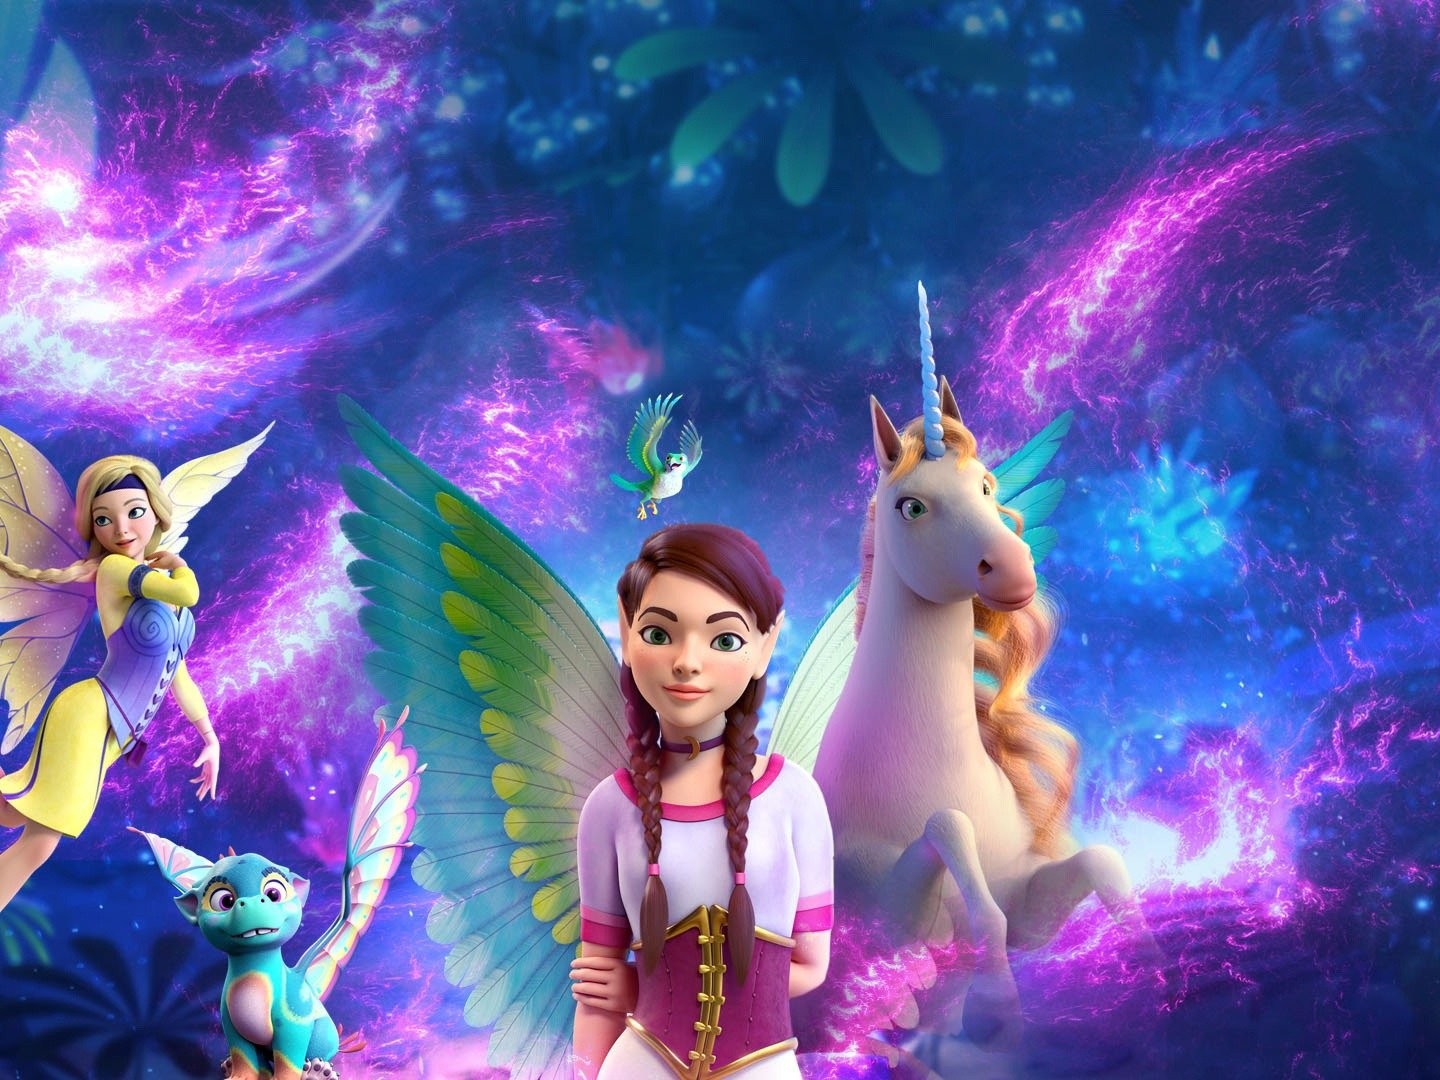 The Fairy Princess and The Unicorn: A Magical Family Adventure